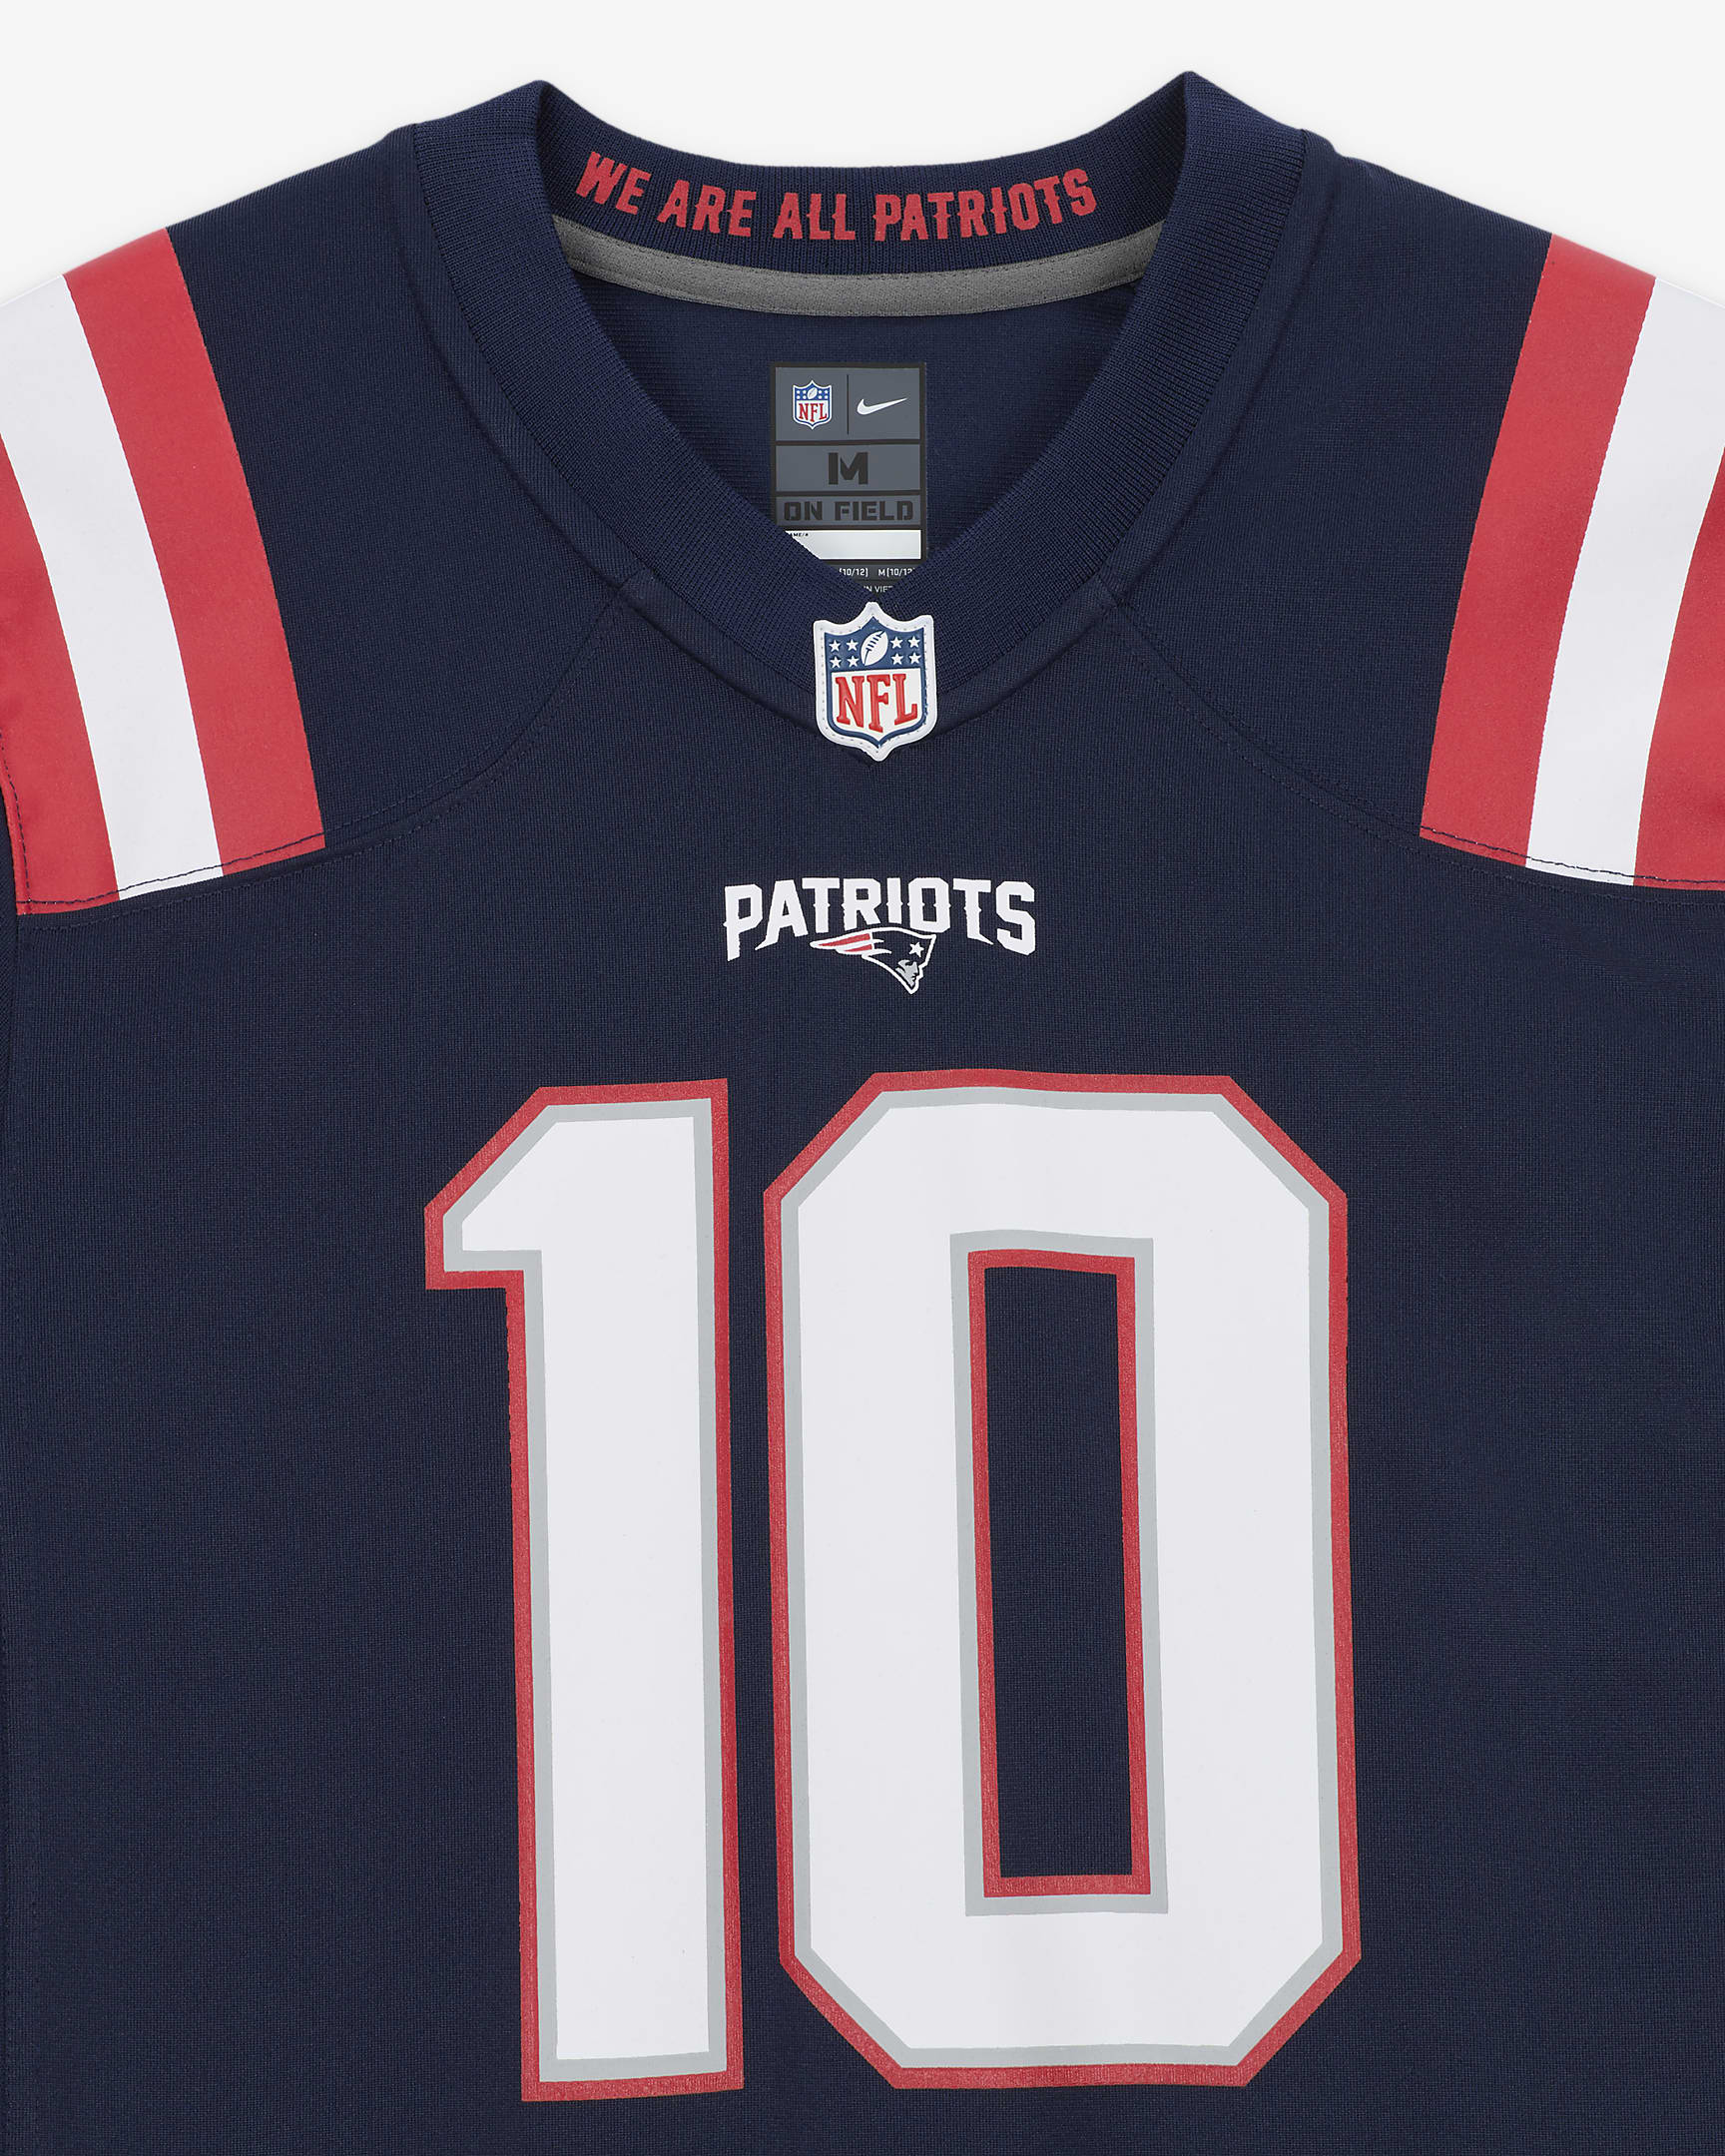 NFL New England Patriots (Mac Jones) American-Football-Spieltrikot für ältere Kinder - College Navy